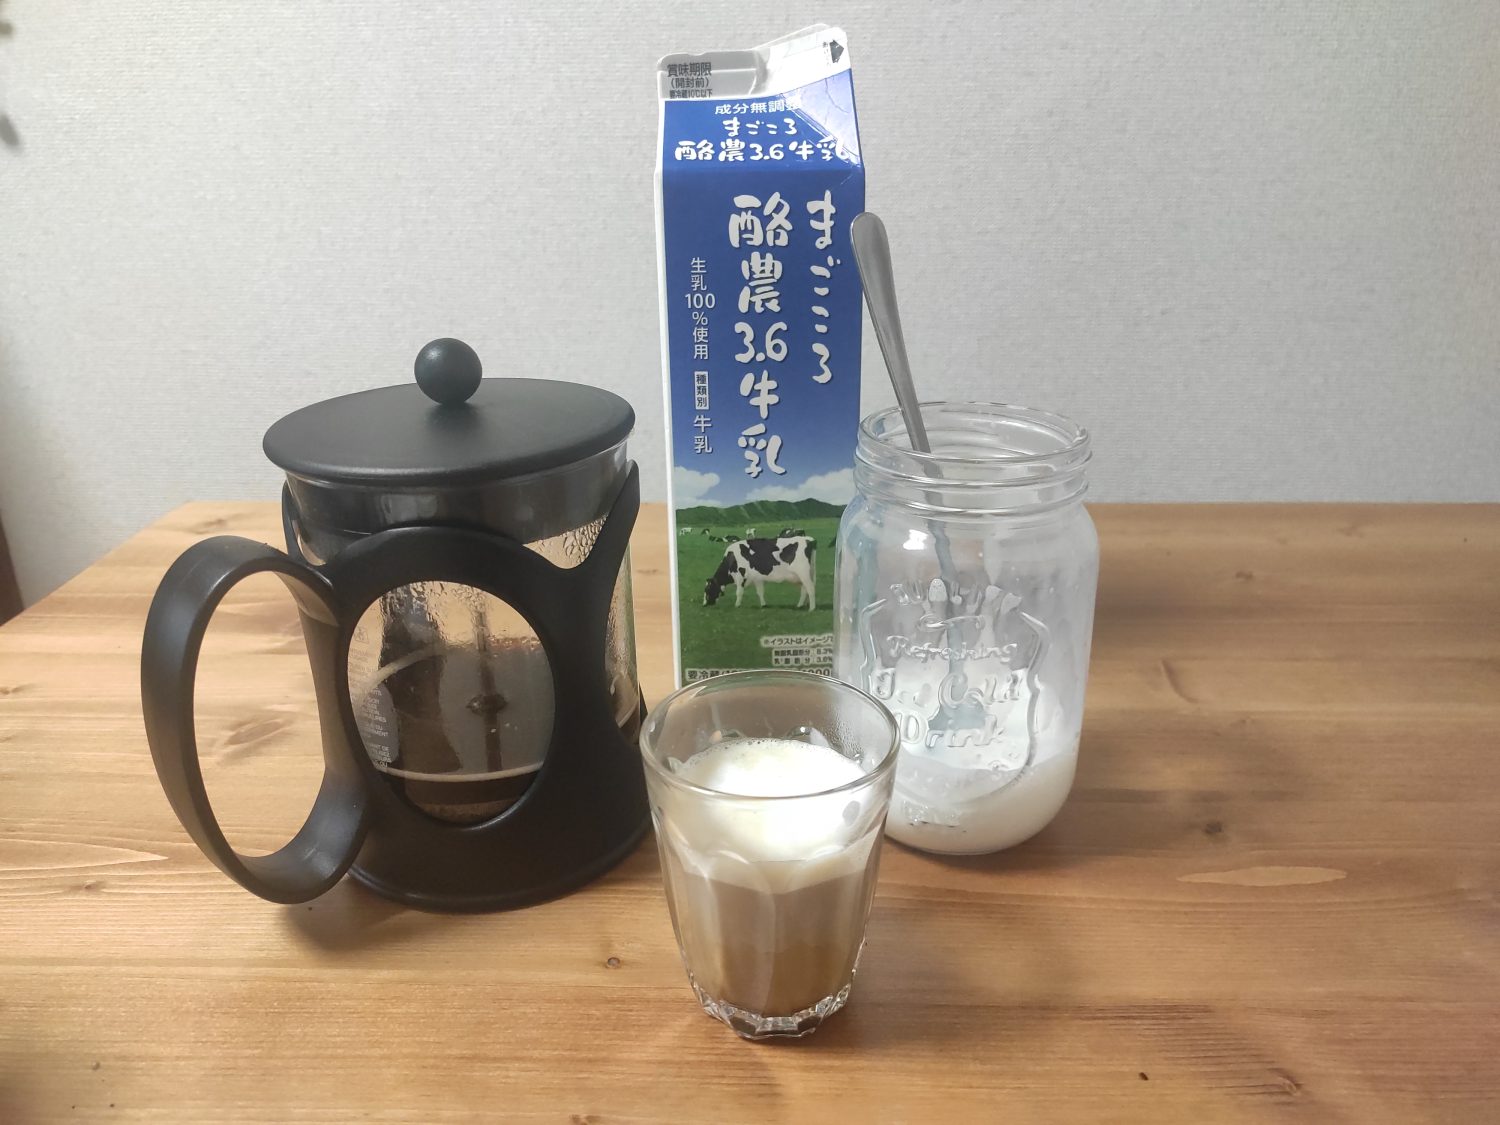 coffee-milk-foam-from-mason-jar